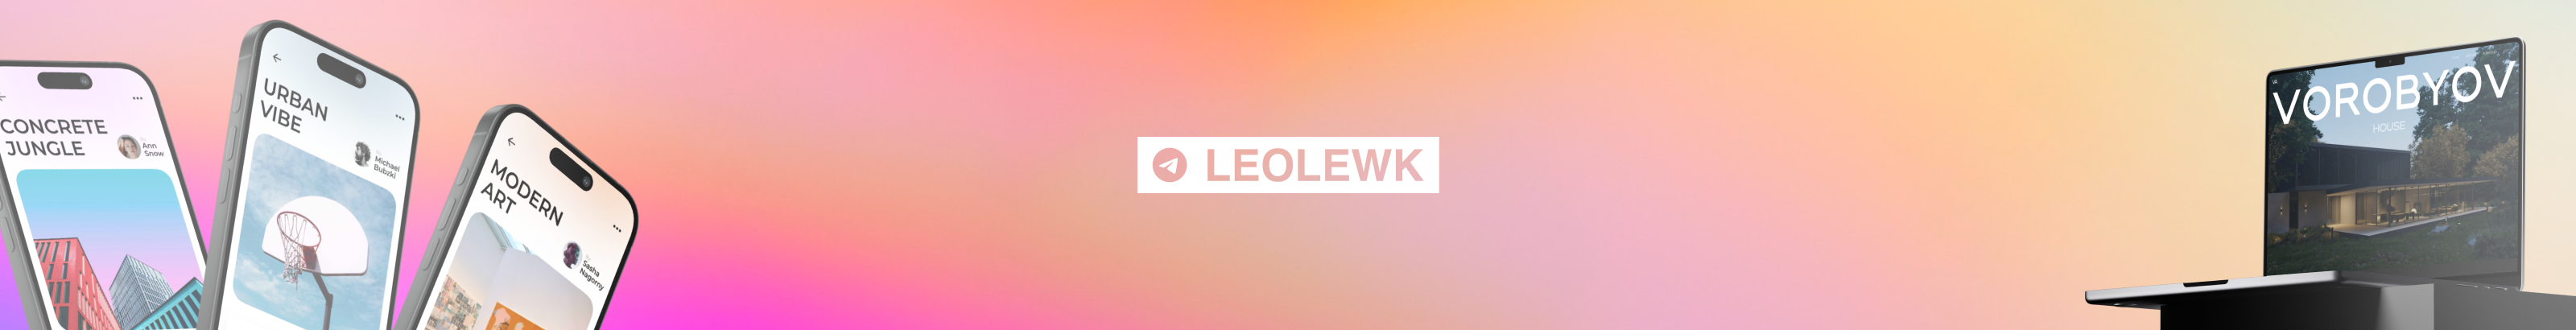 обложка автора leolewk